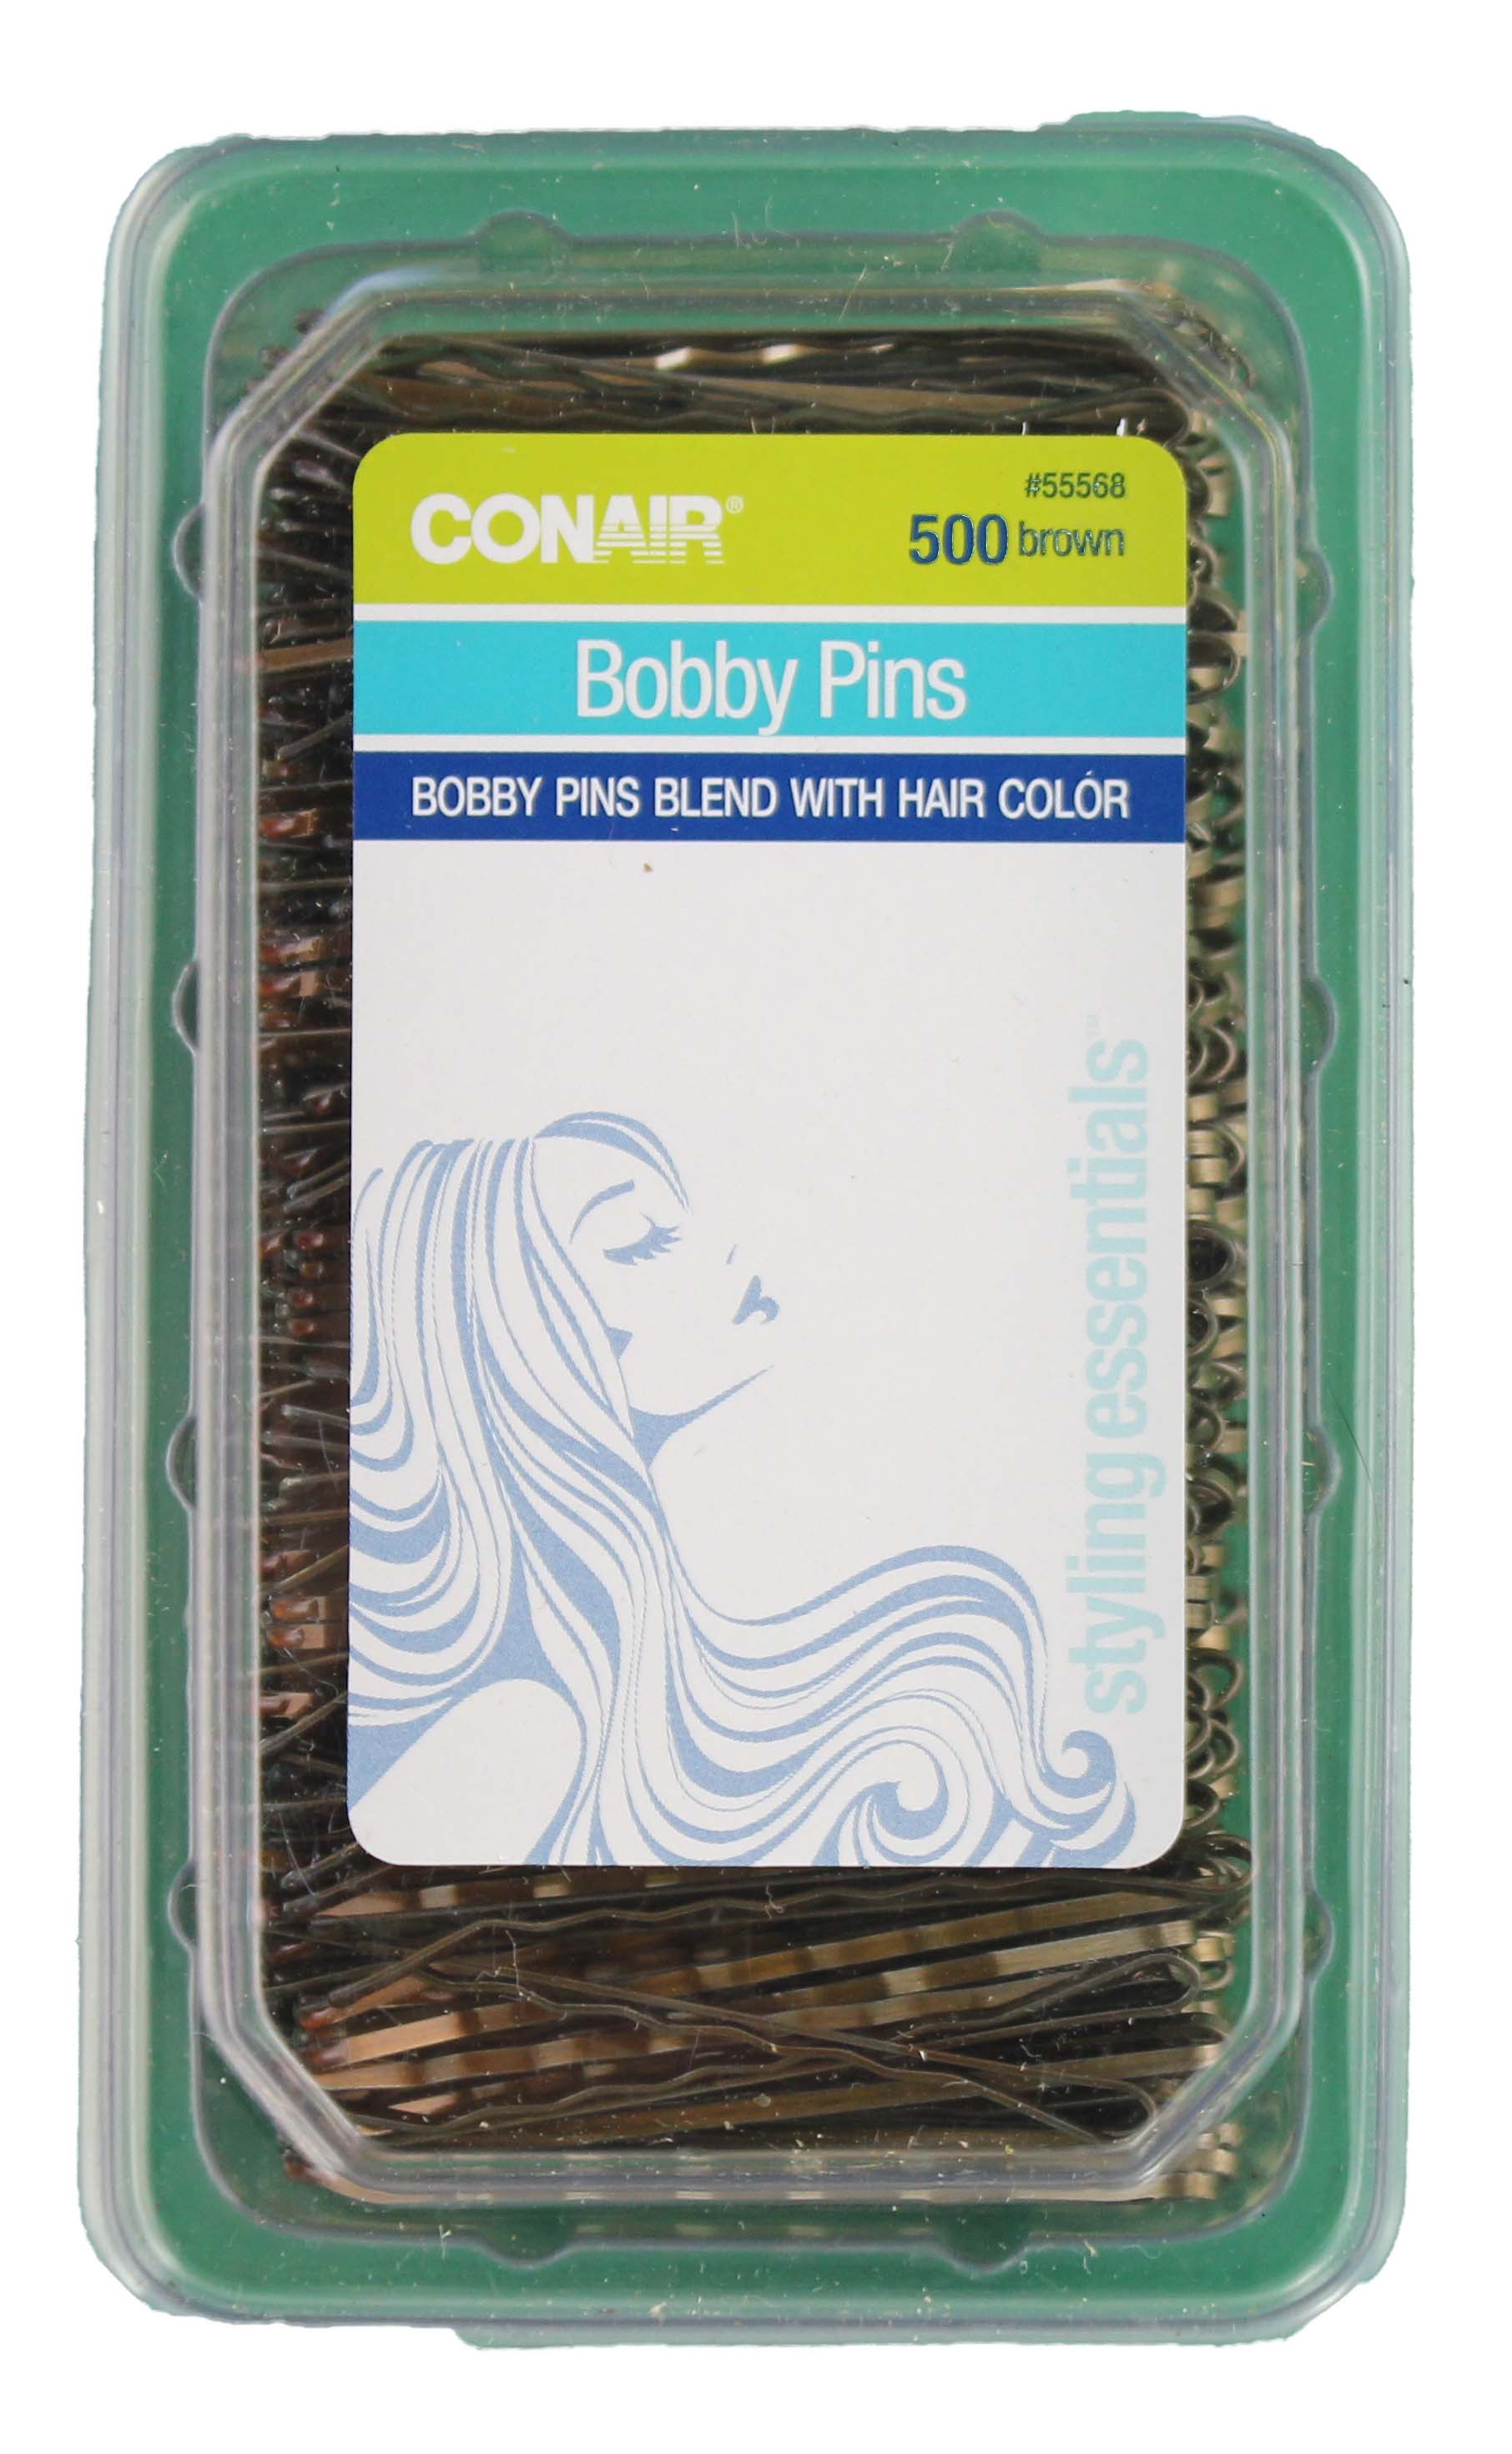 Conair 500 Bobby Pins, Brown